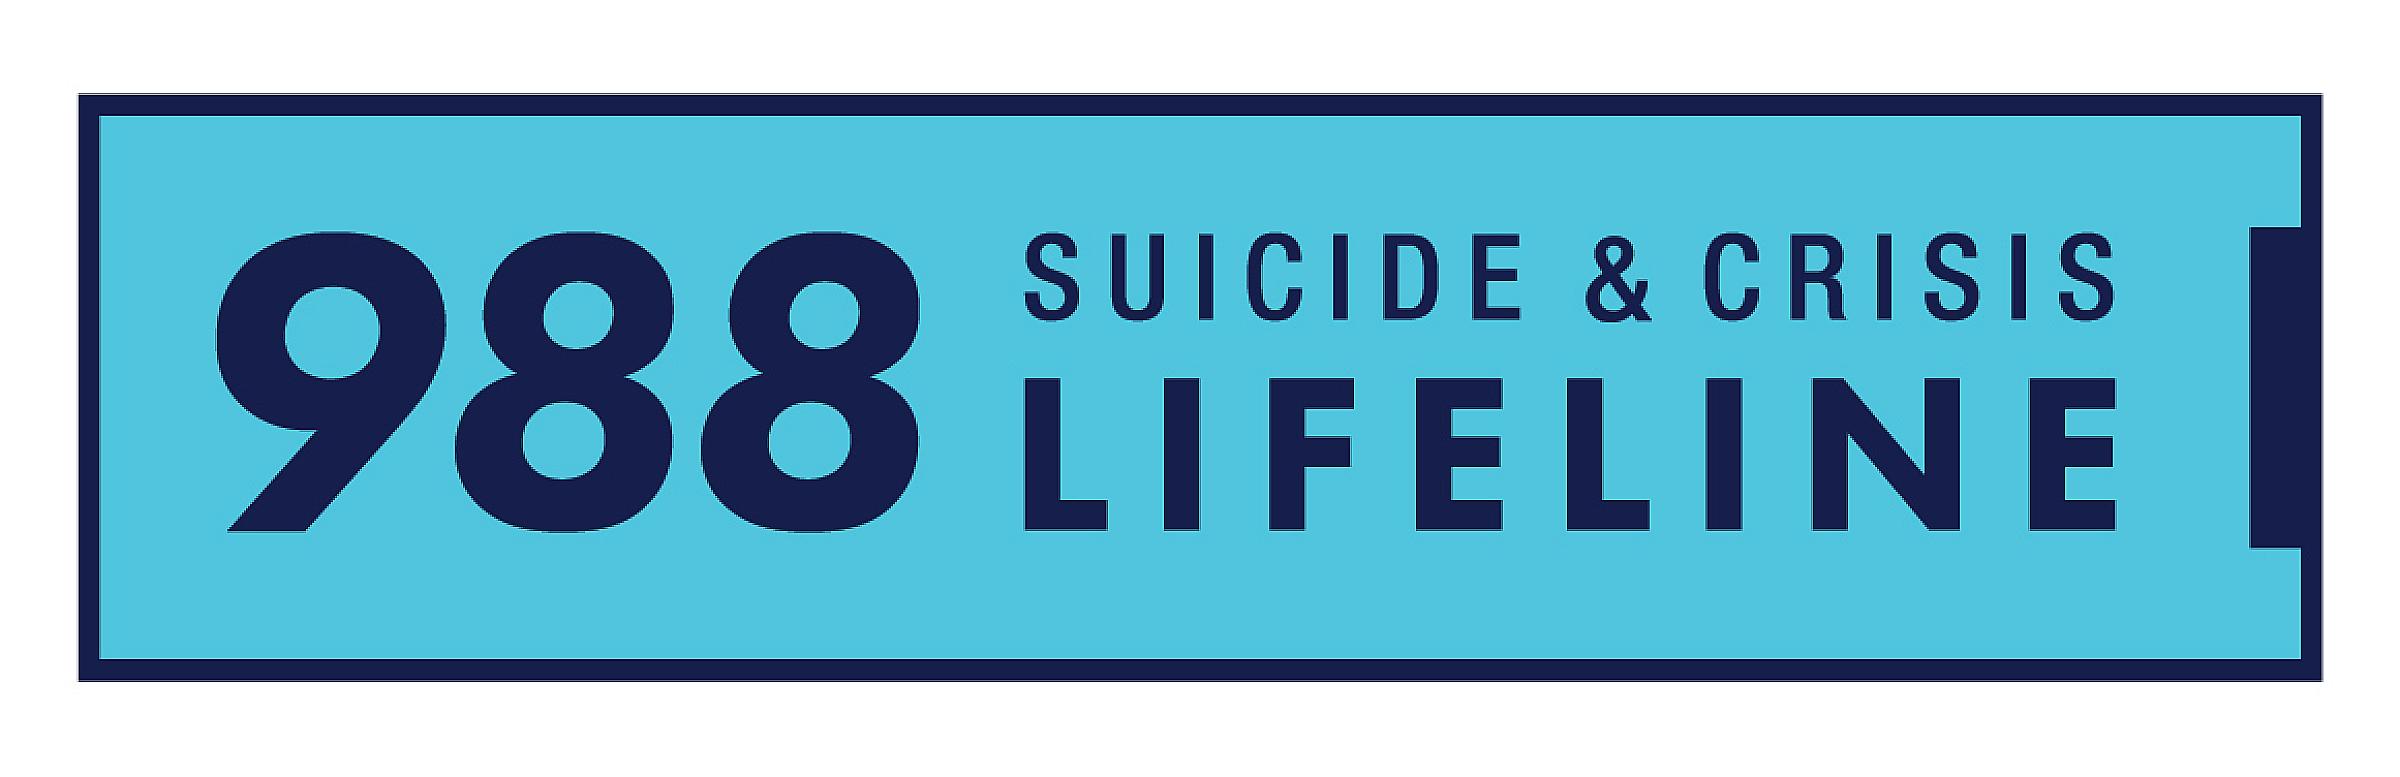 988 Suicide and Crisis Lifeline